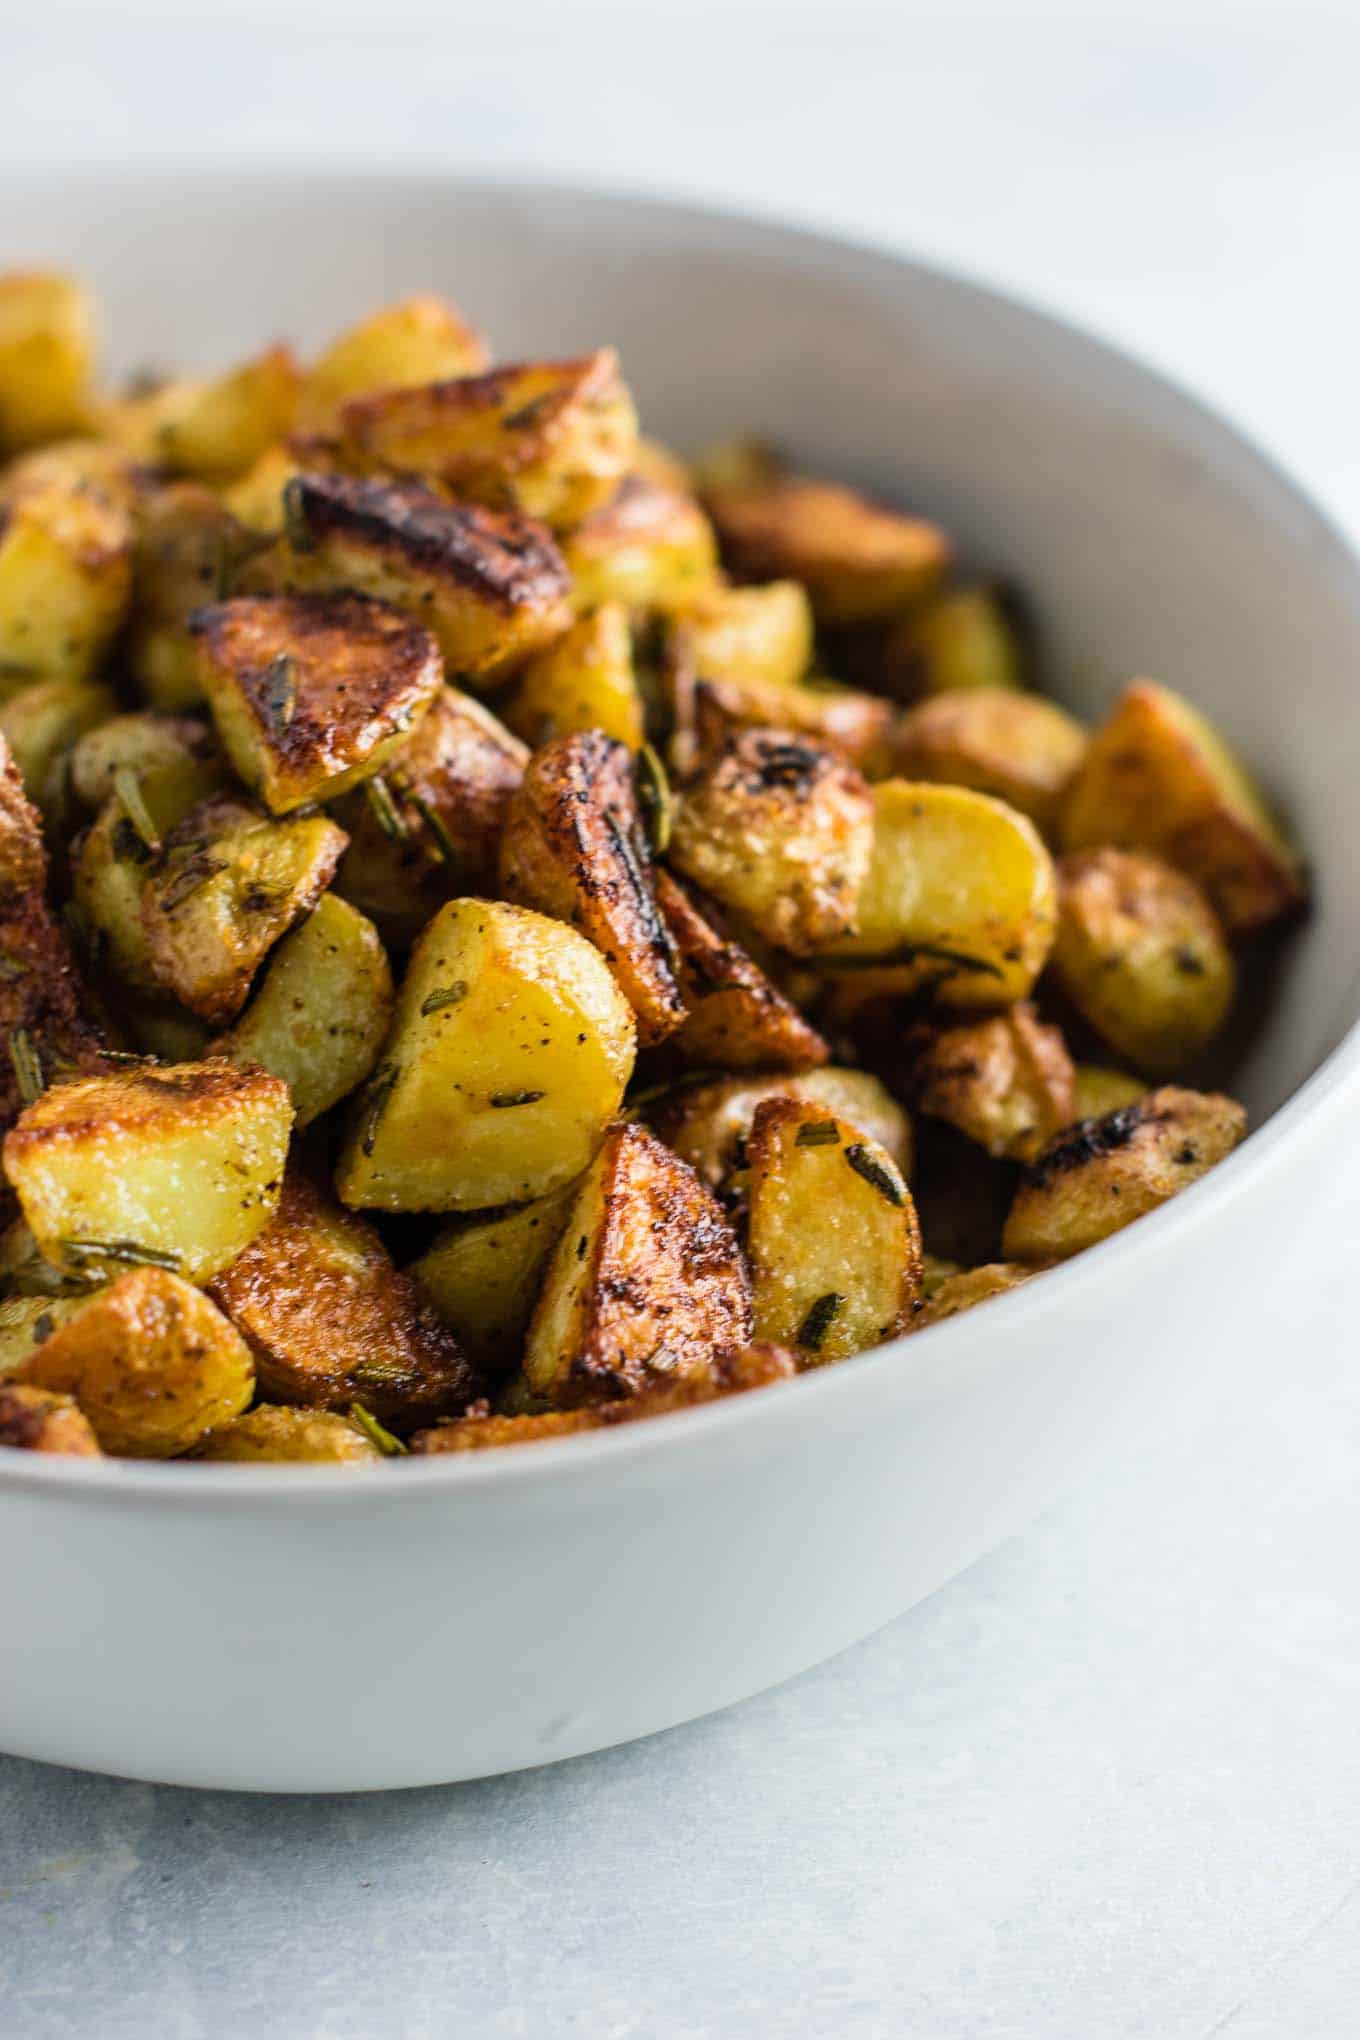 Rosemary roasted potatoes recipe made with fresh rosemary and olive oil. Everyone will love this easy side dish! #rosemaryroastedpotatoes #vegan #sidedish #roastedpotatoes